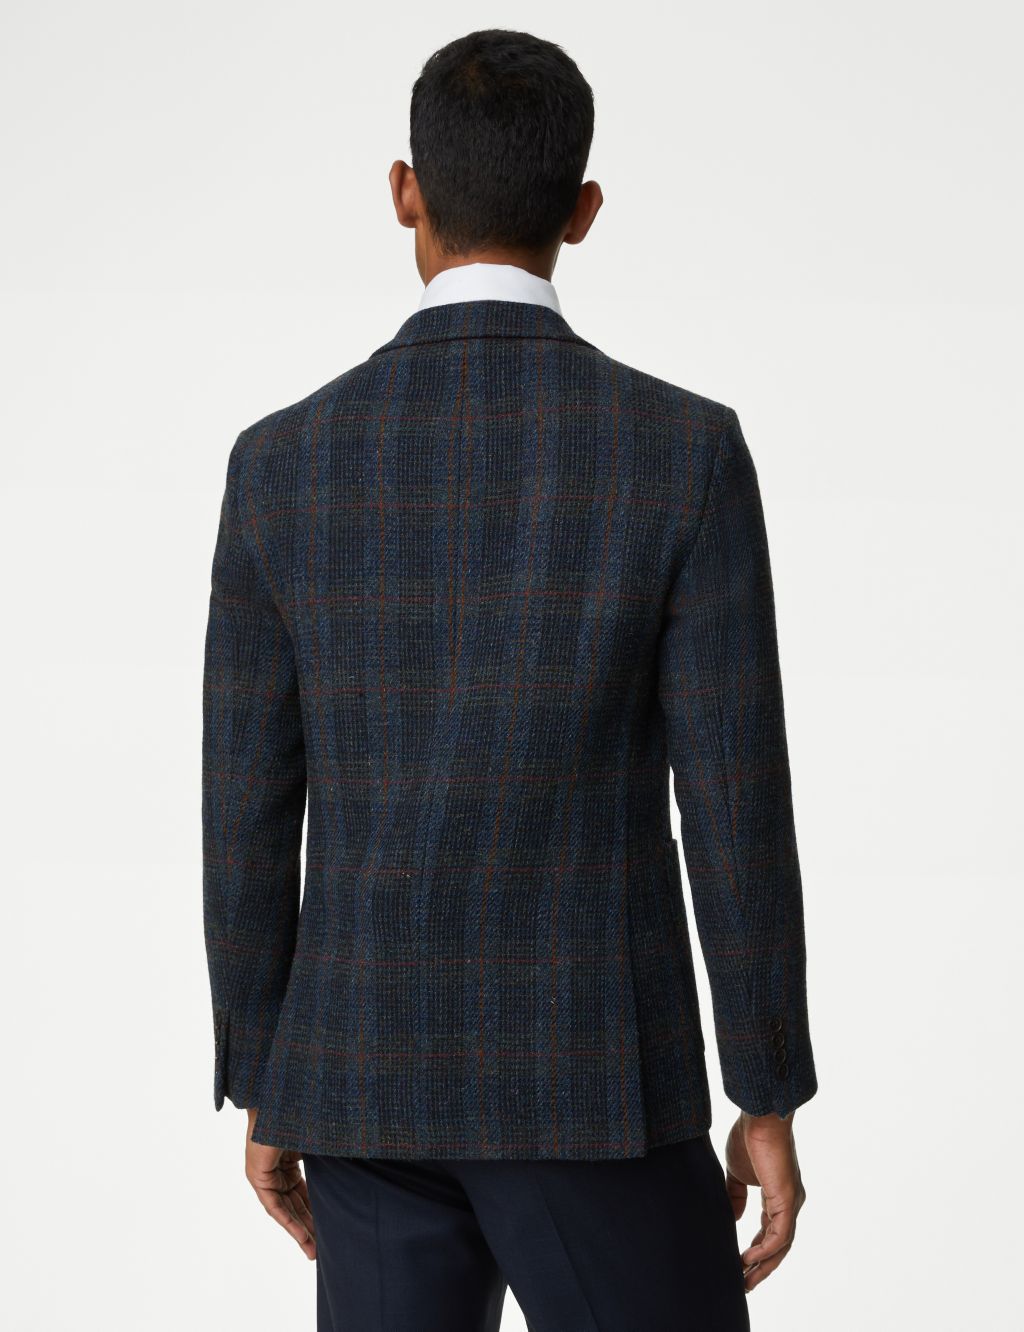 British Pure Wool Tweed Blazer image 5